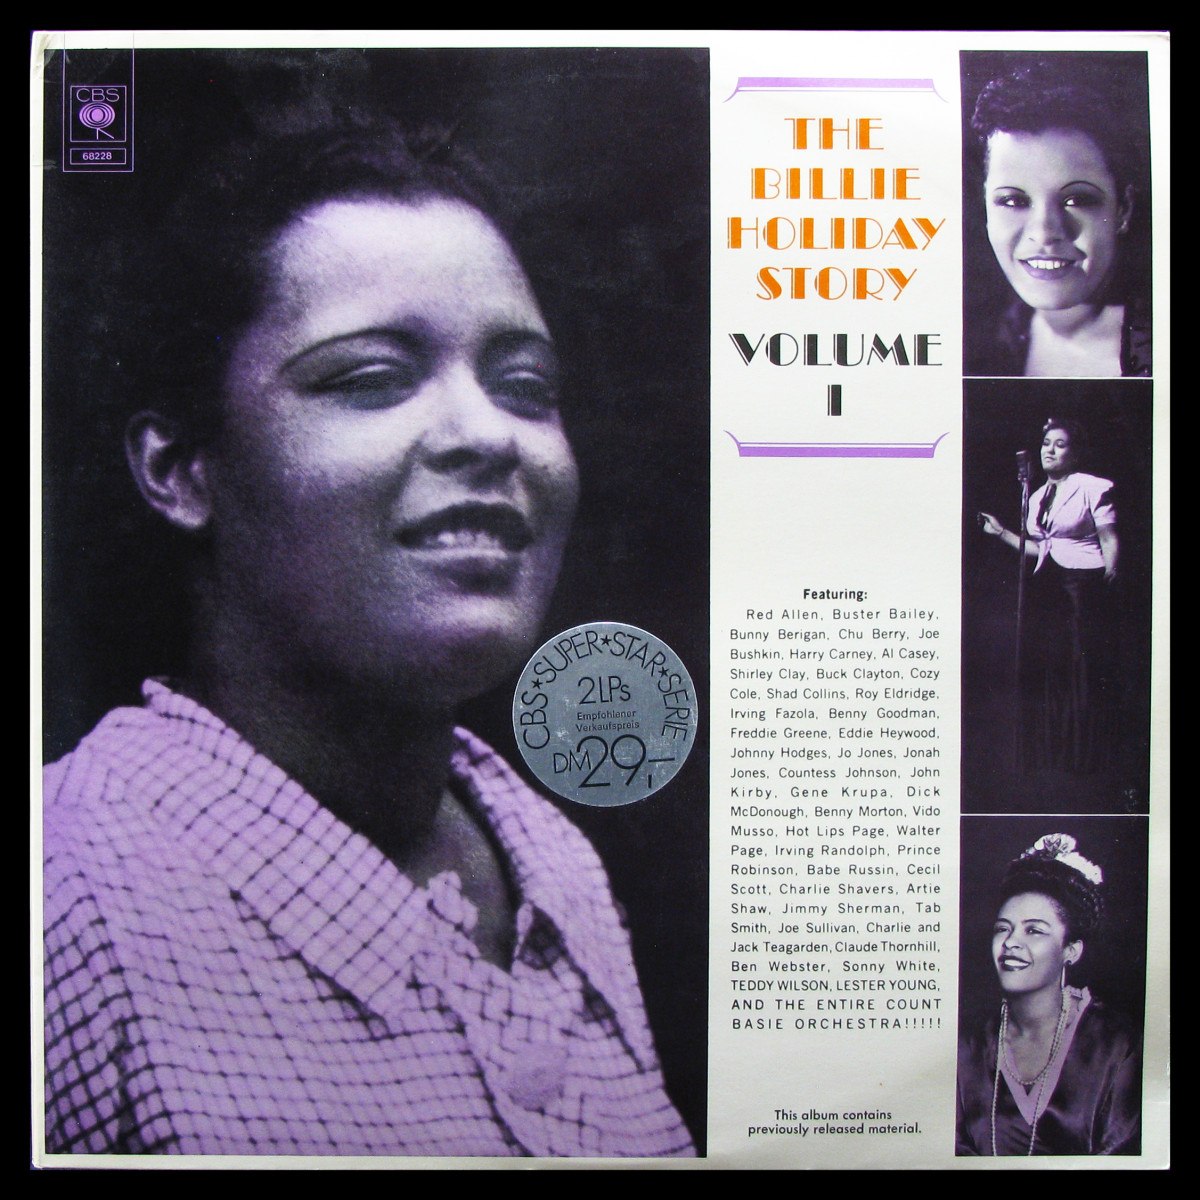 Billie Holiday Story Volume 1